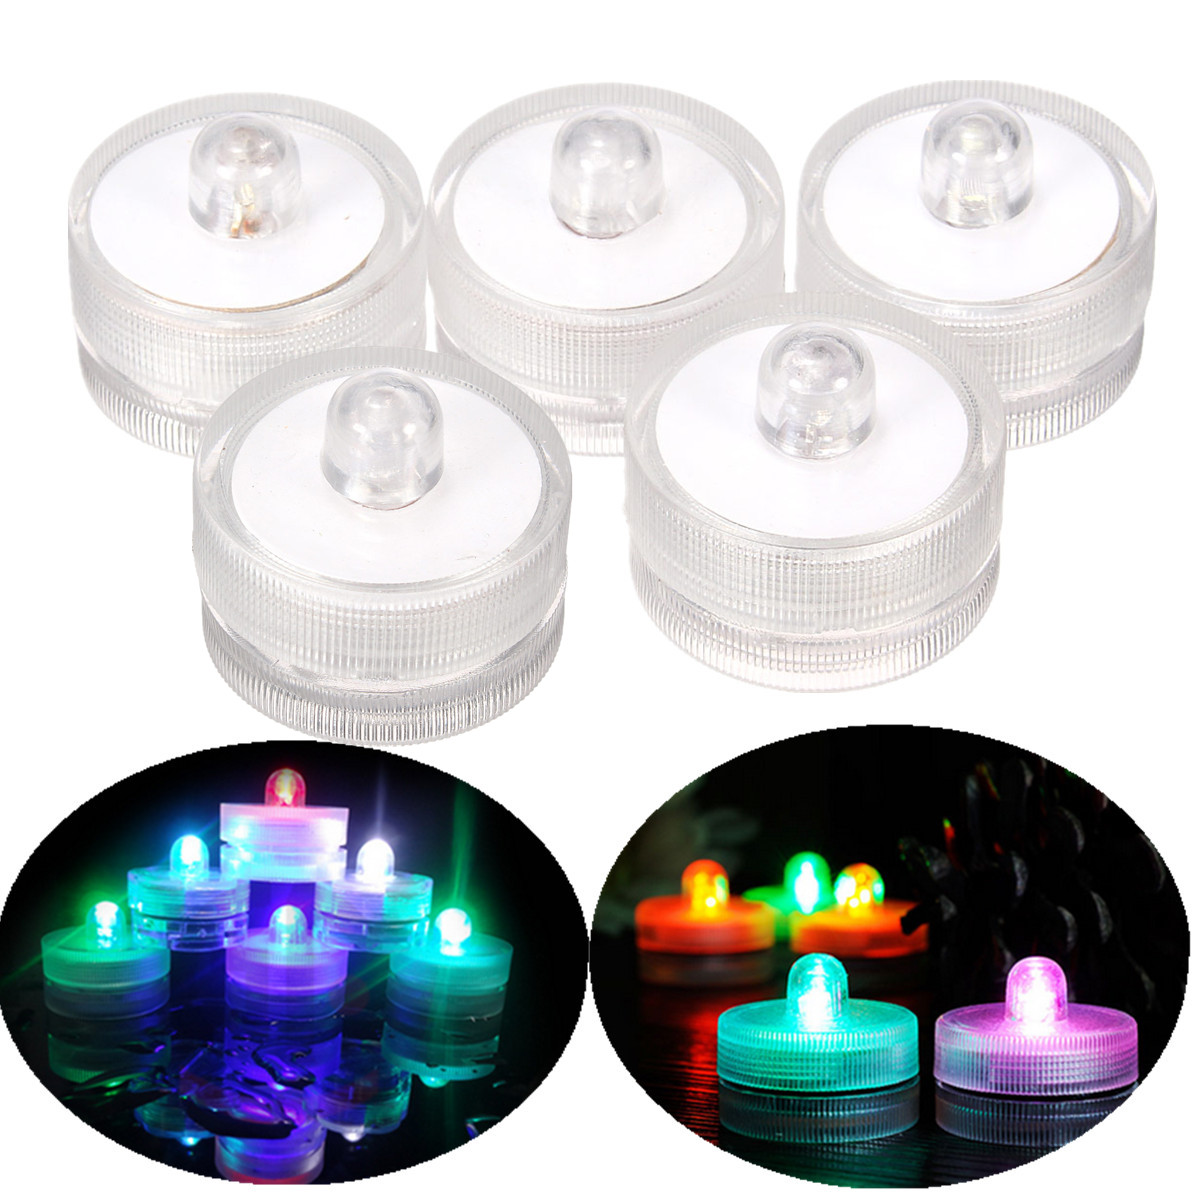 Waterproof-LED-Light-Party-Wedding-Decor-Floral-Lamp-Decoration-Vase-Candle-Fishbowl-Light-999473-4